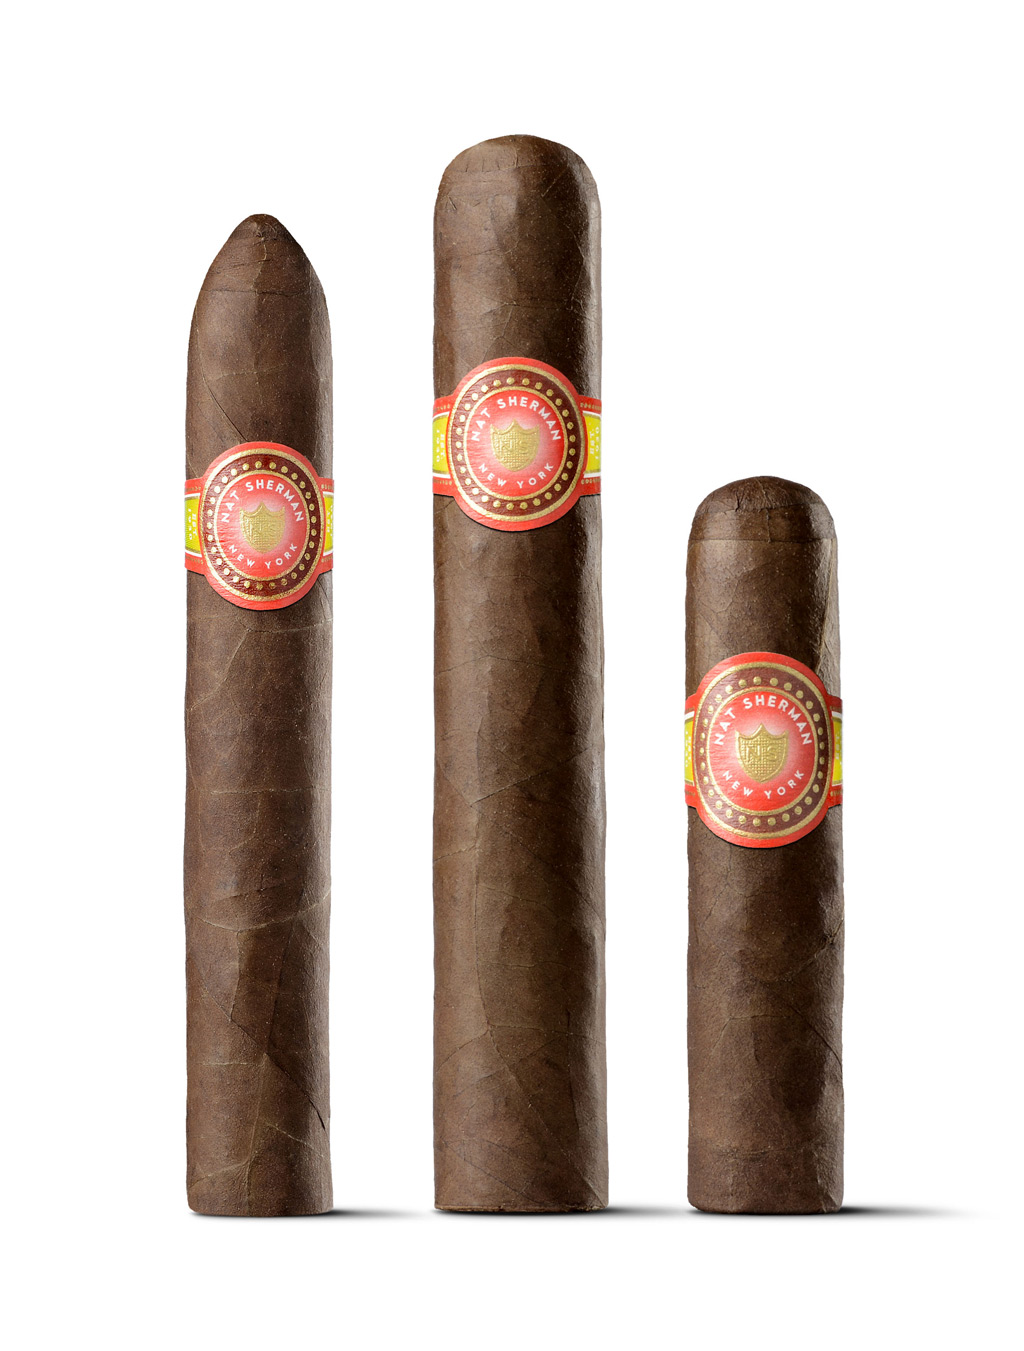 Nat Sherman Panamericana cigar new sizes Belicoso Gordo Robustico